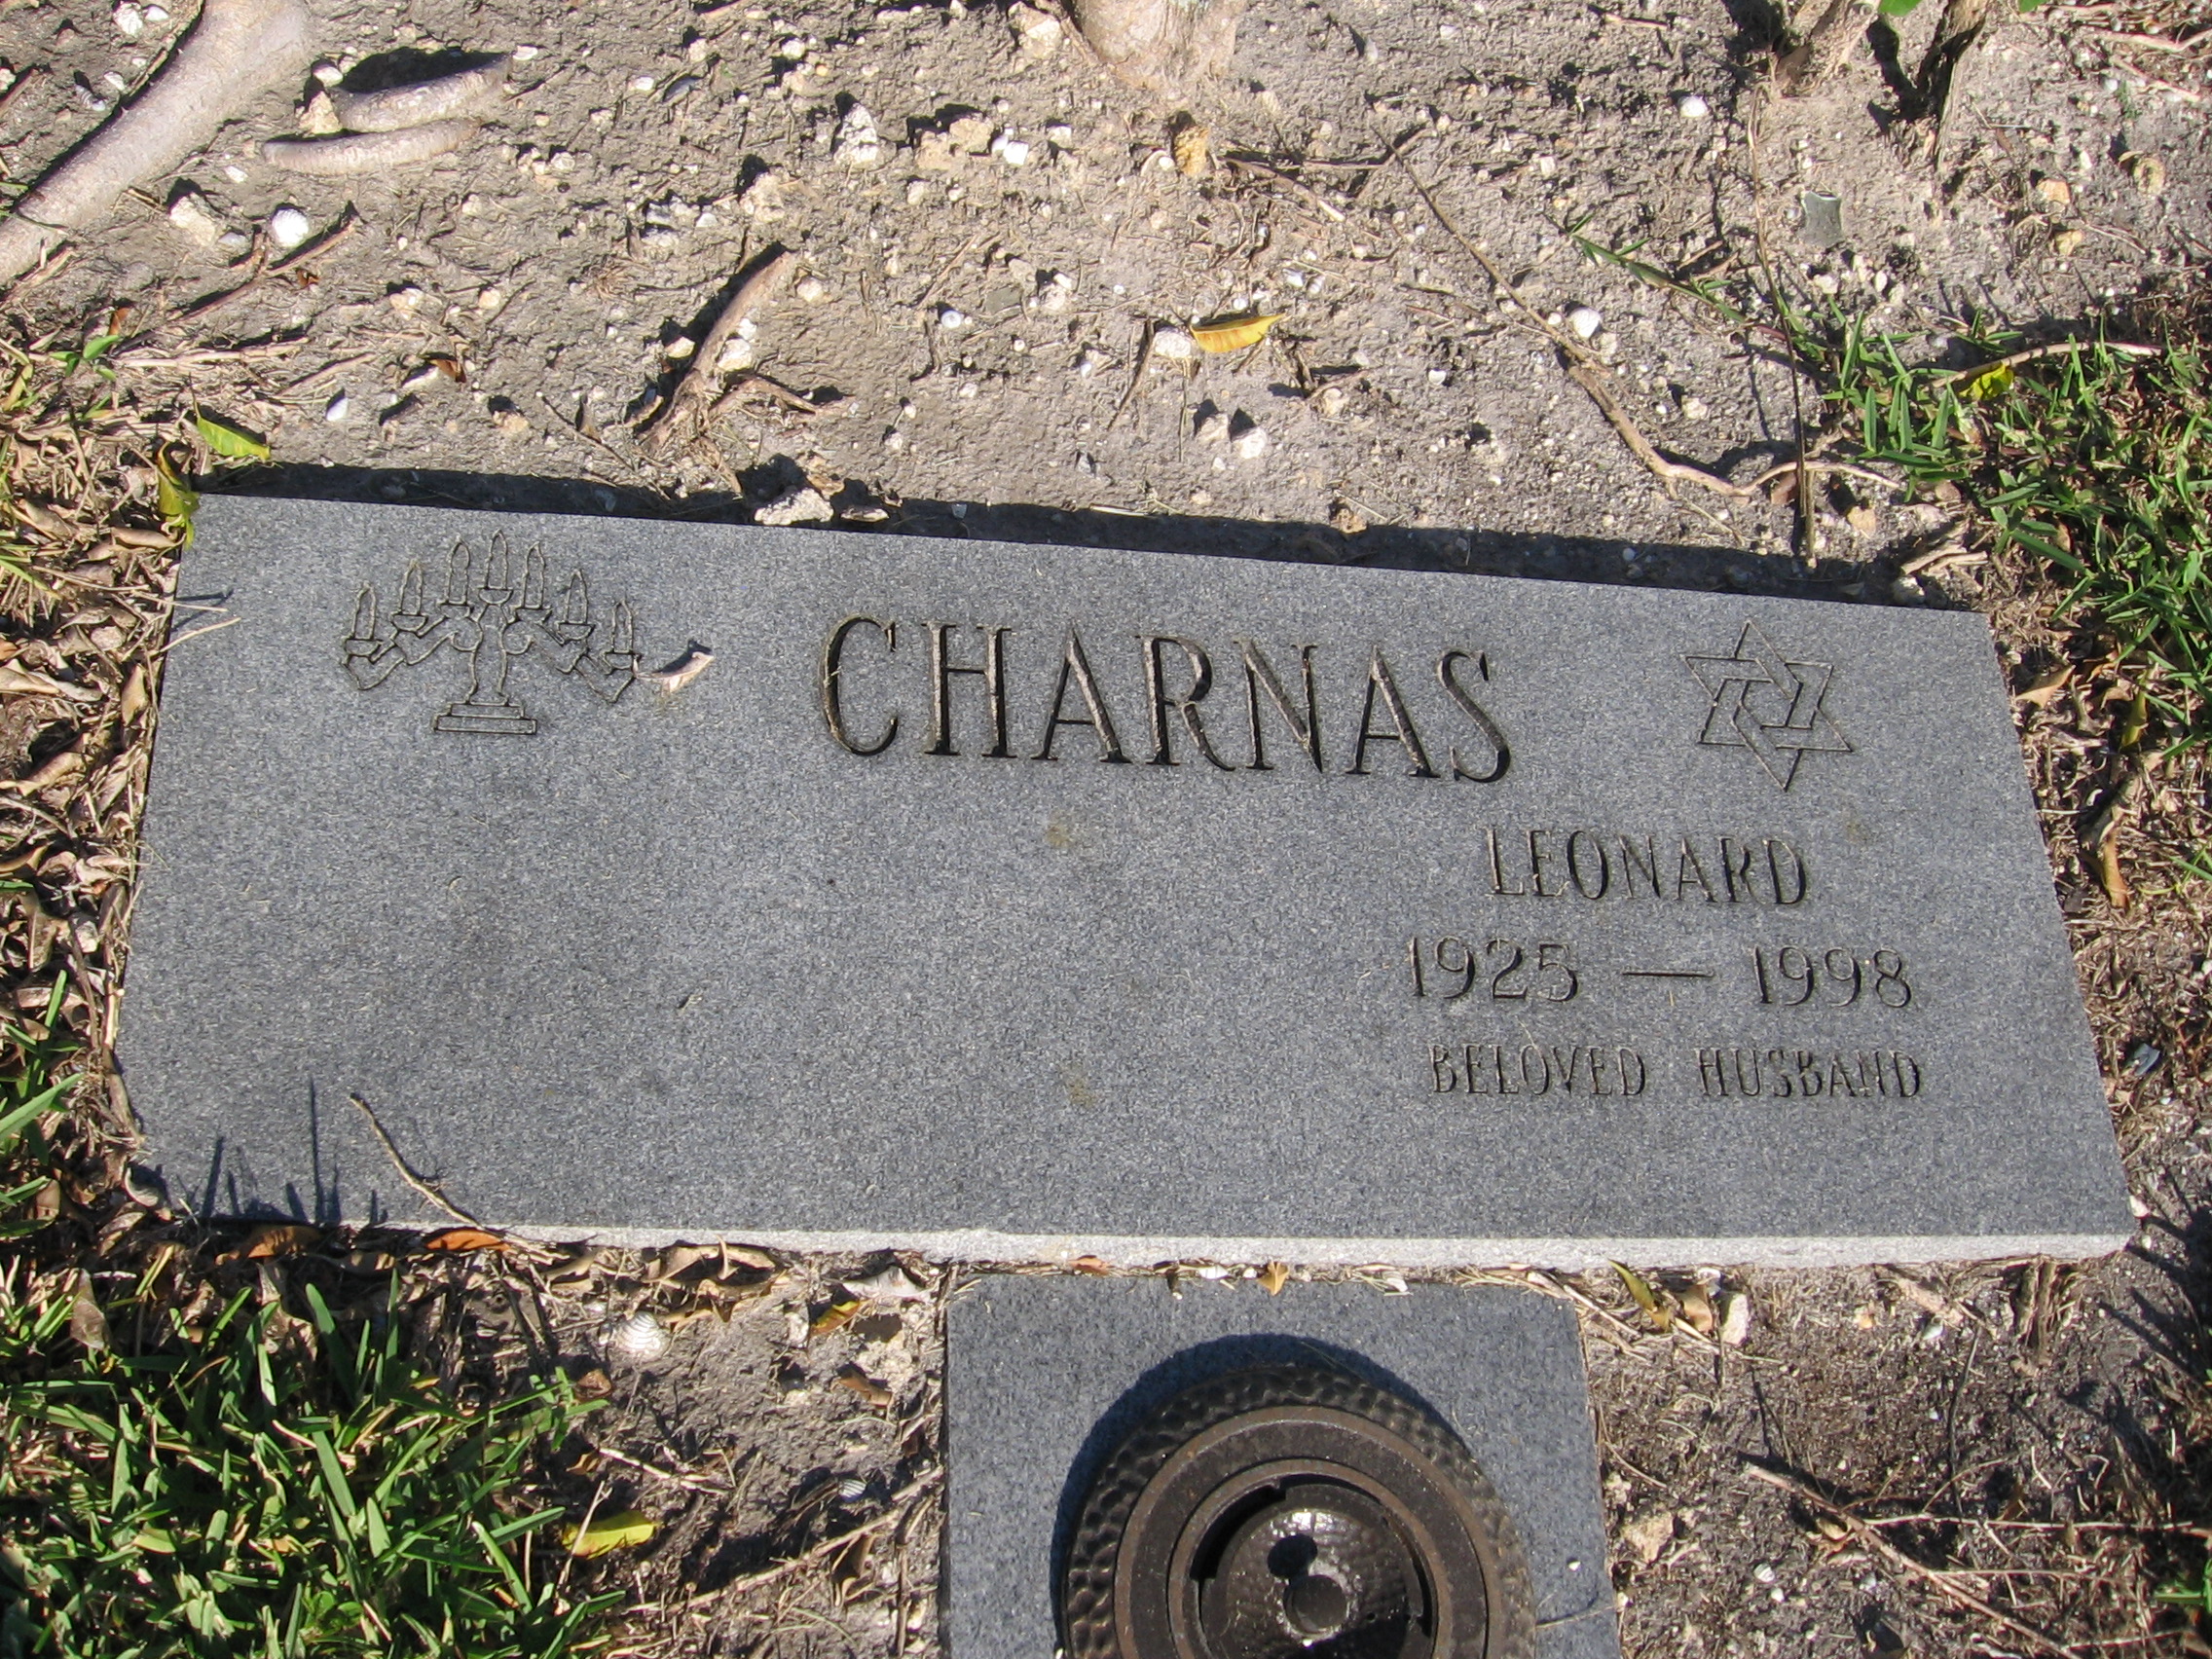 Leonard Charnas